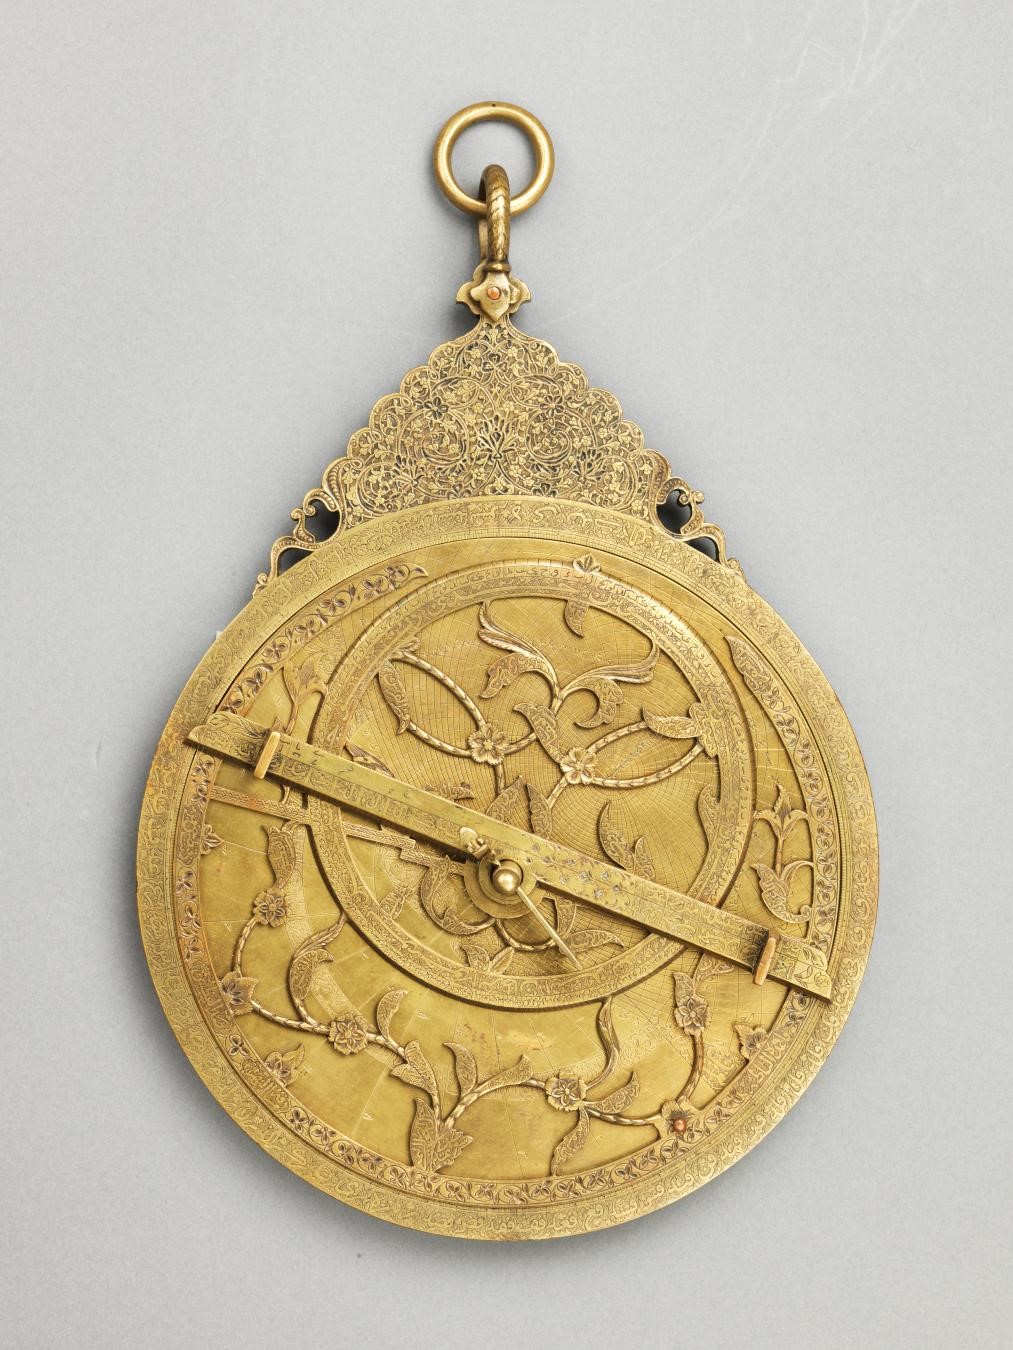 Iran, Astrolabe, late 17th−18th century